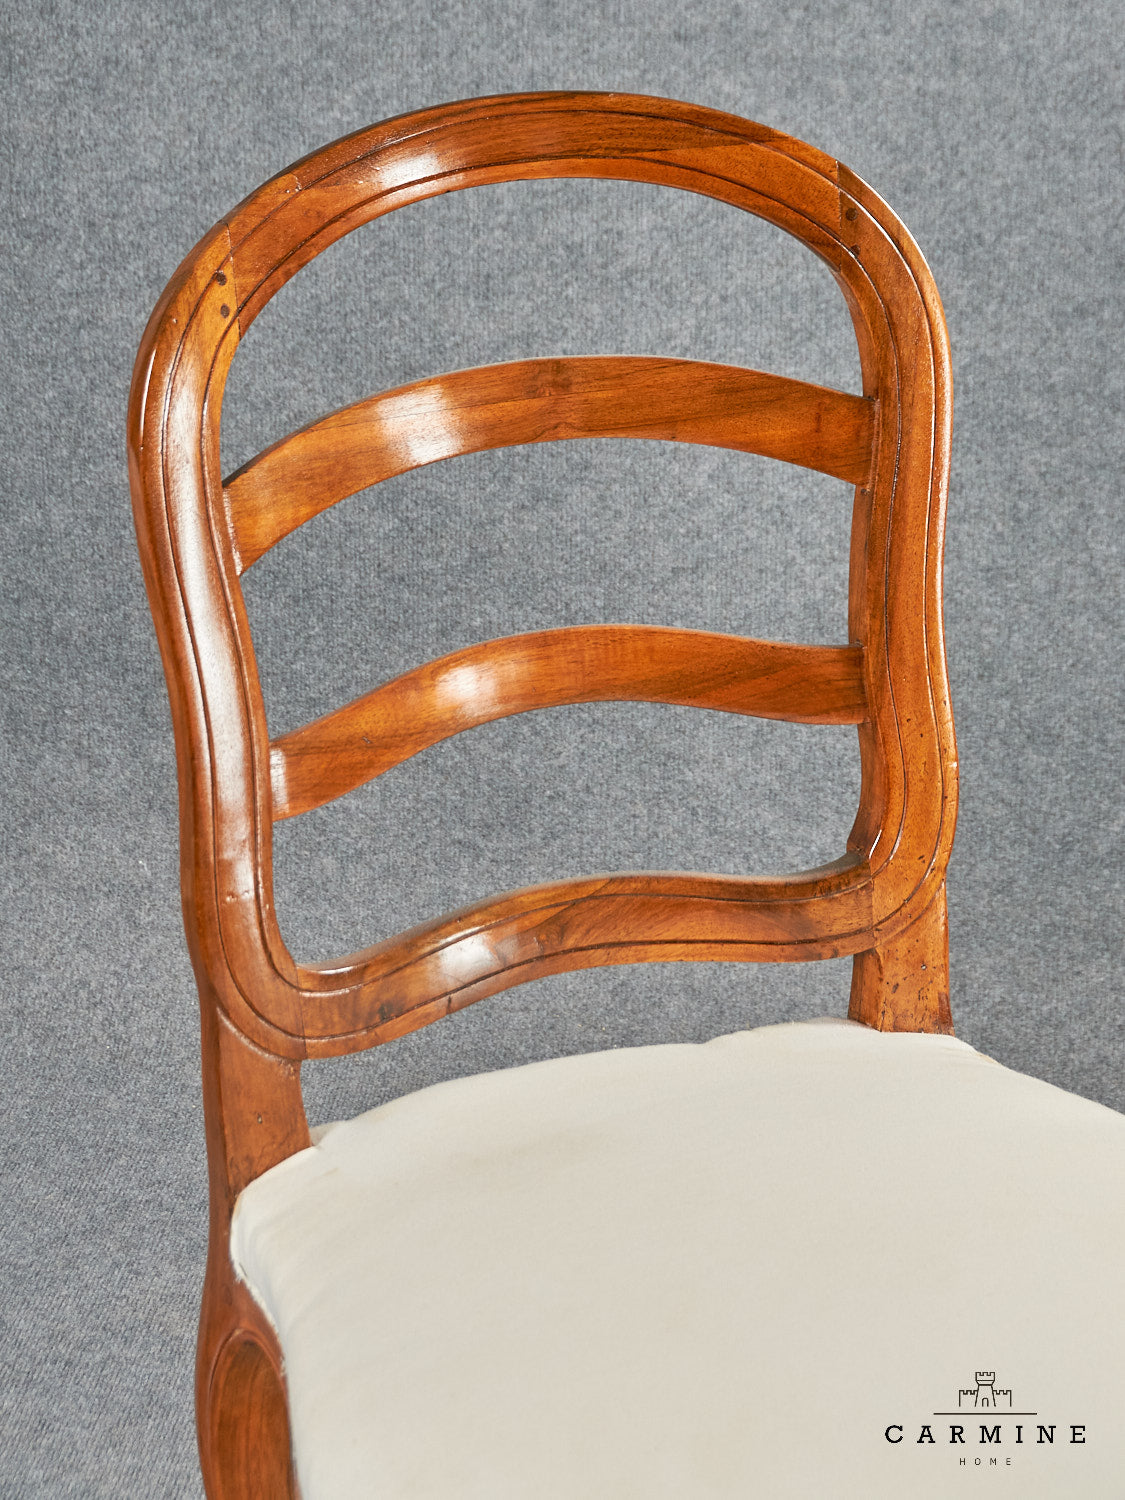 2 chaises bernoises, milieu du XVIIIe siècle